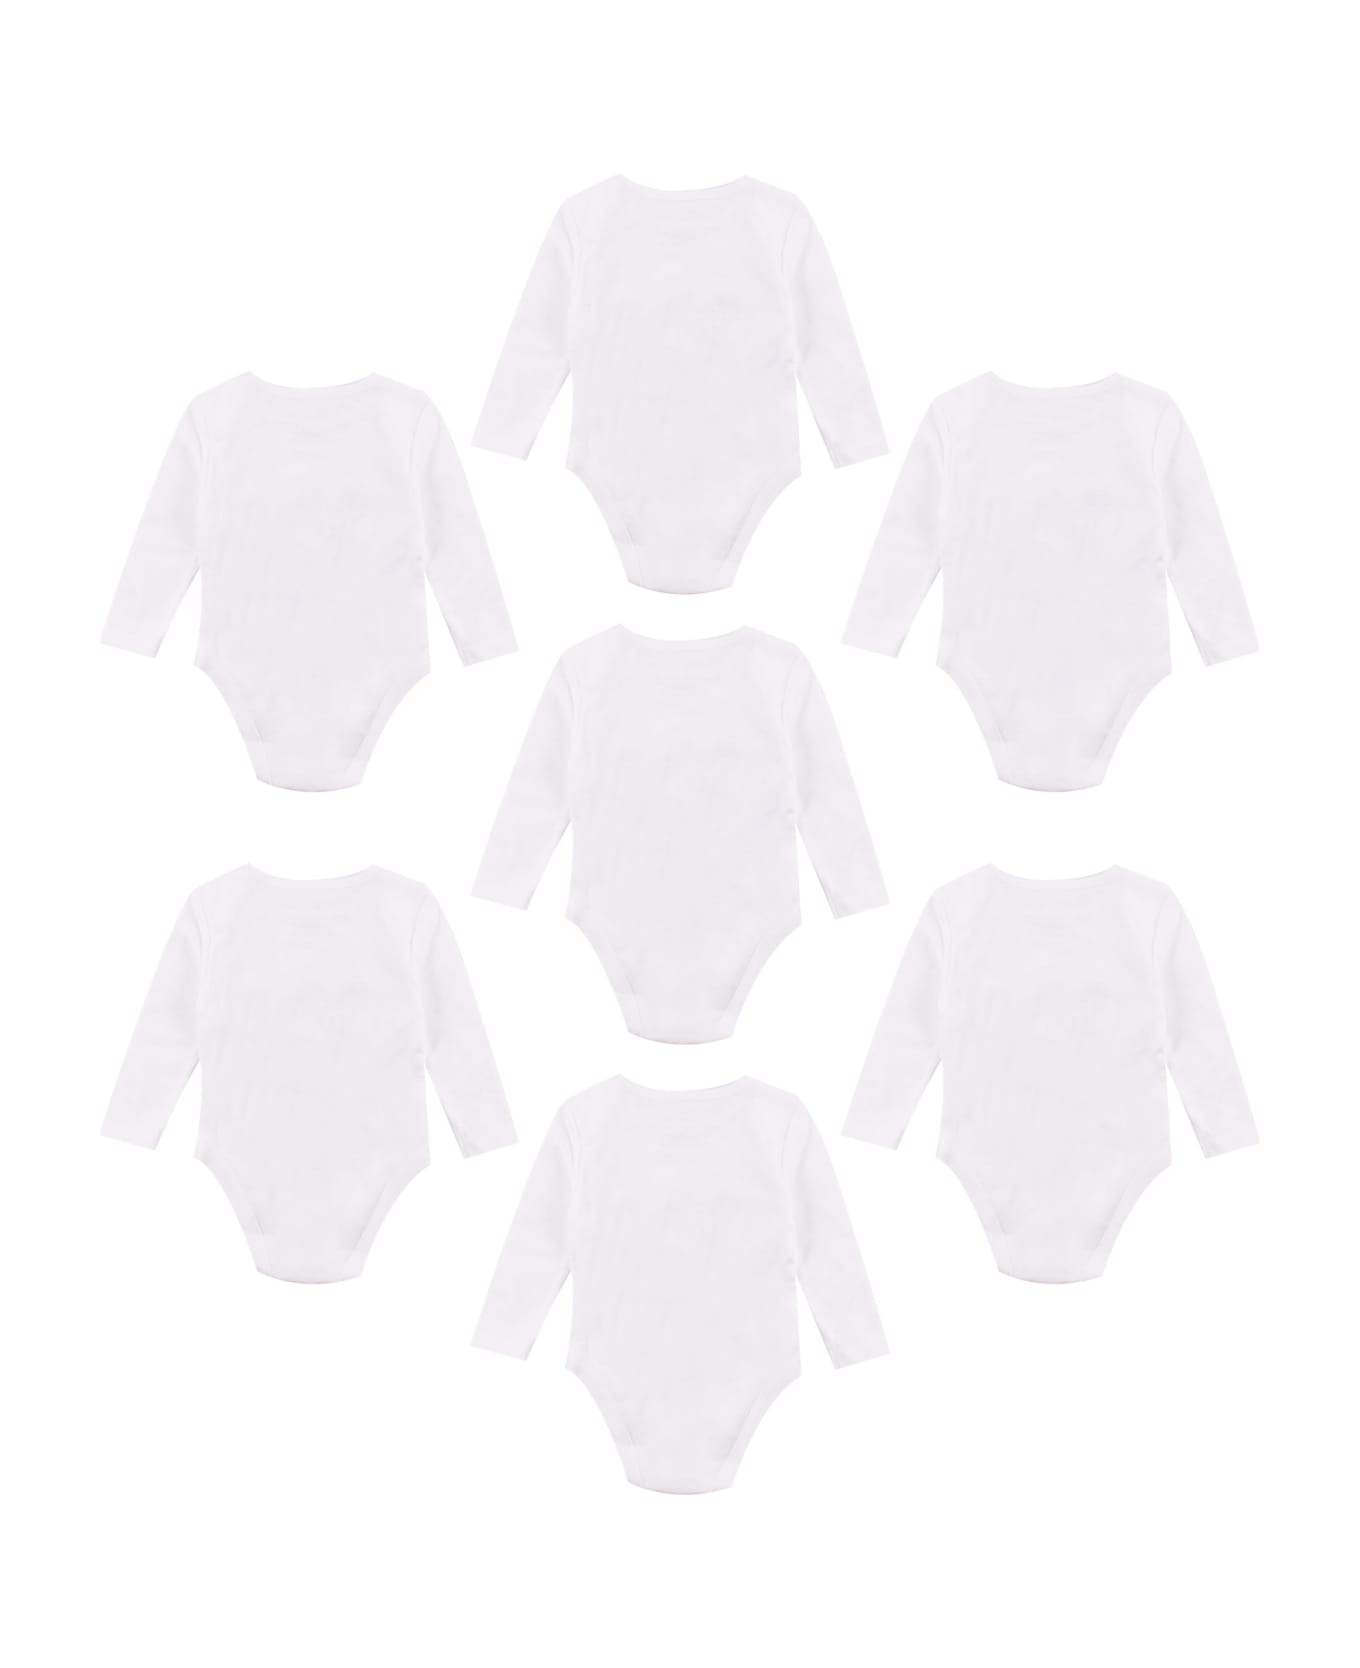 Stella McCartney Kids Set Of 7 Cotton Bodysuits - White